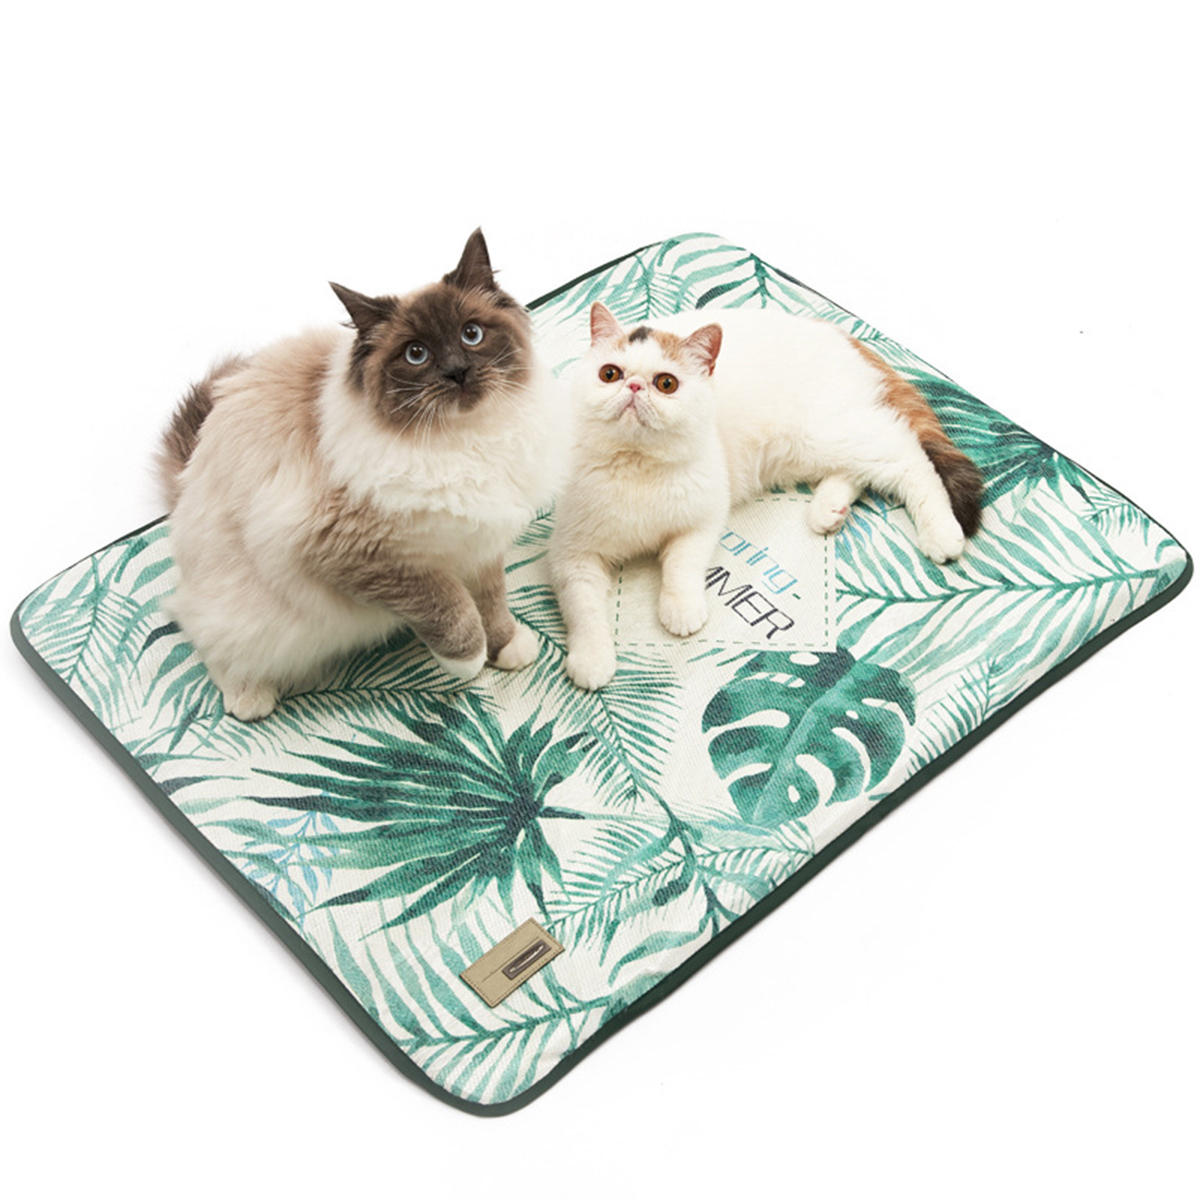 

Охлаждающий коврик для собаки Pet Кот Chilly Breathable нескользящий летний прохладный коврик для подушки подушки для до